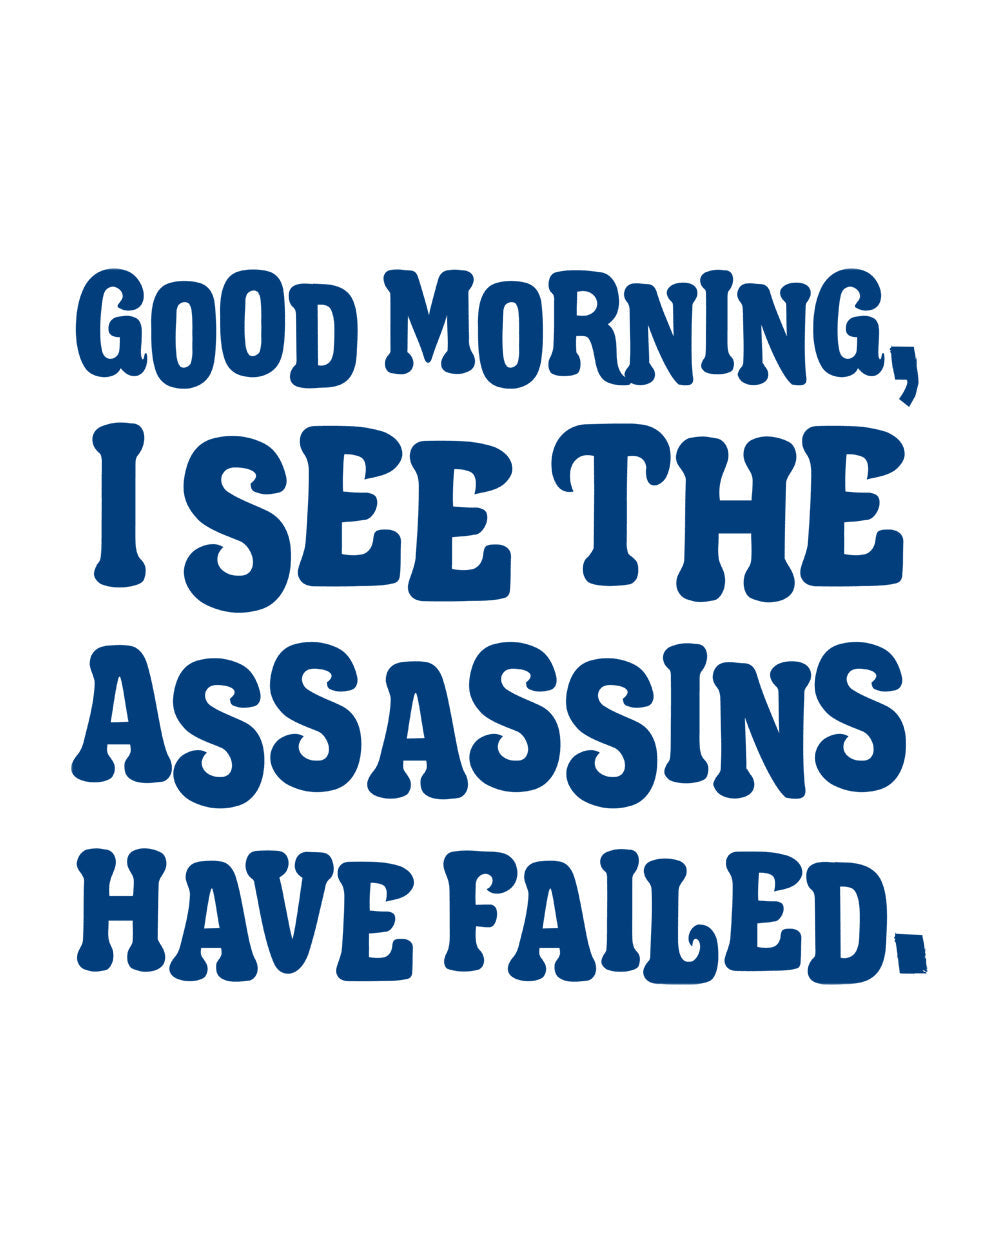 Good Morning Assassins Failed Funny Anti-Social Rude Slogan Saying Cotton T-Shirt